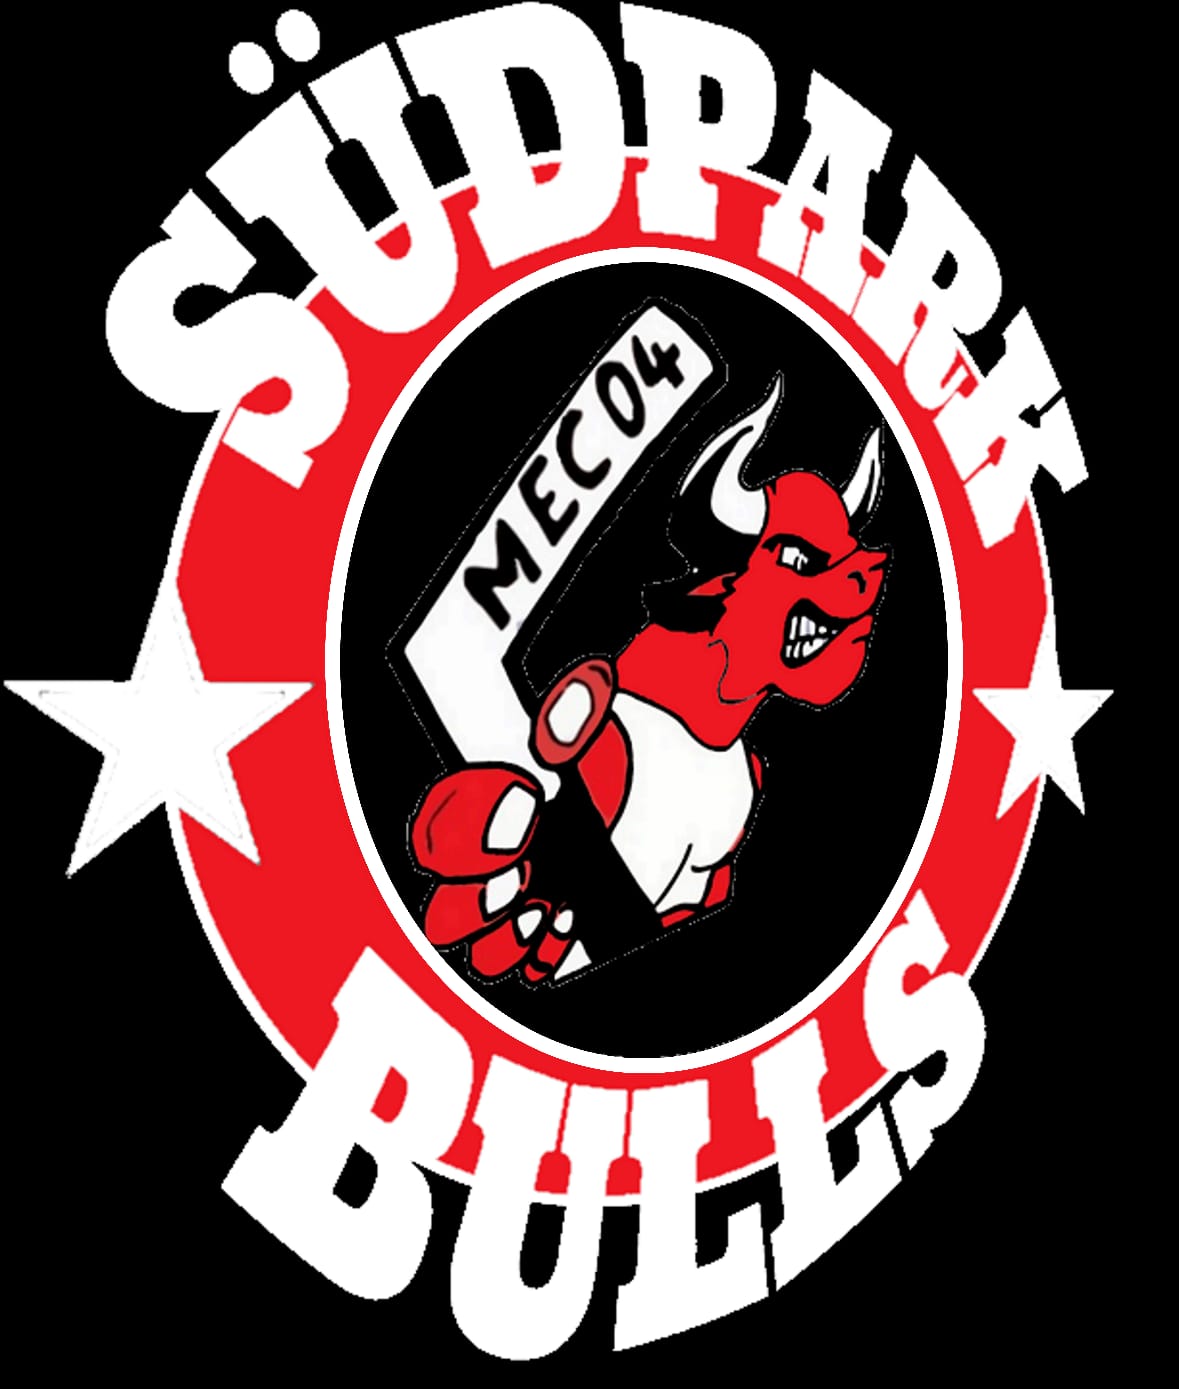 Saale Bulls Fanclub Südparkbulls